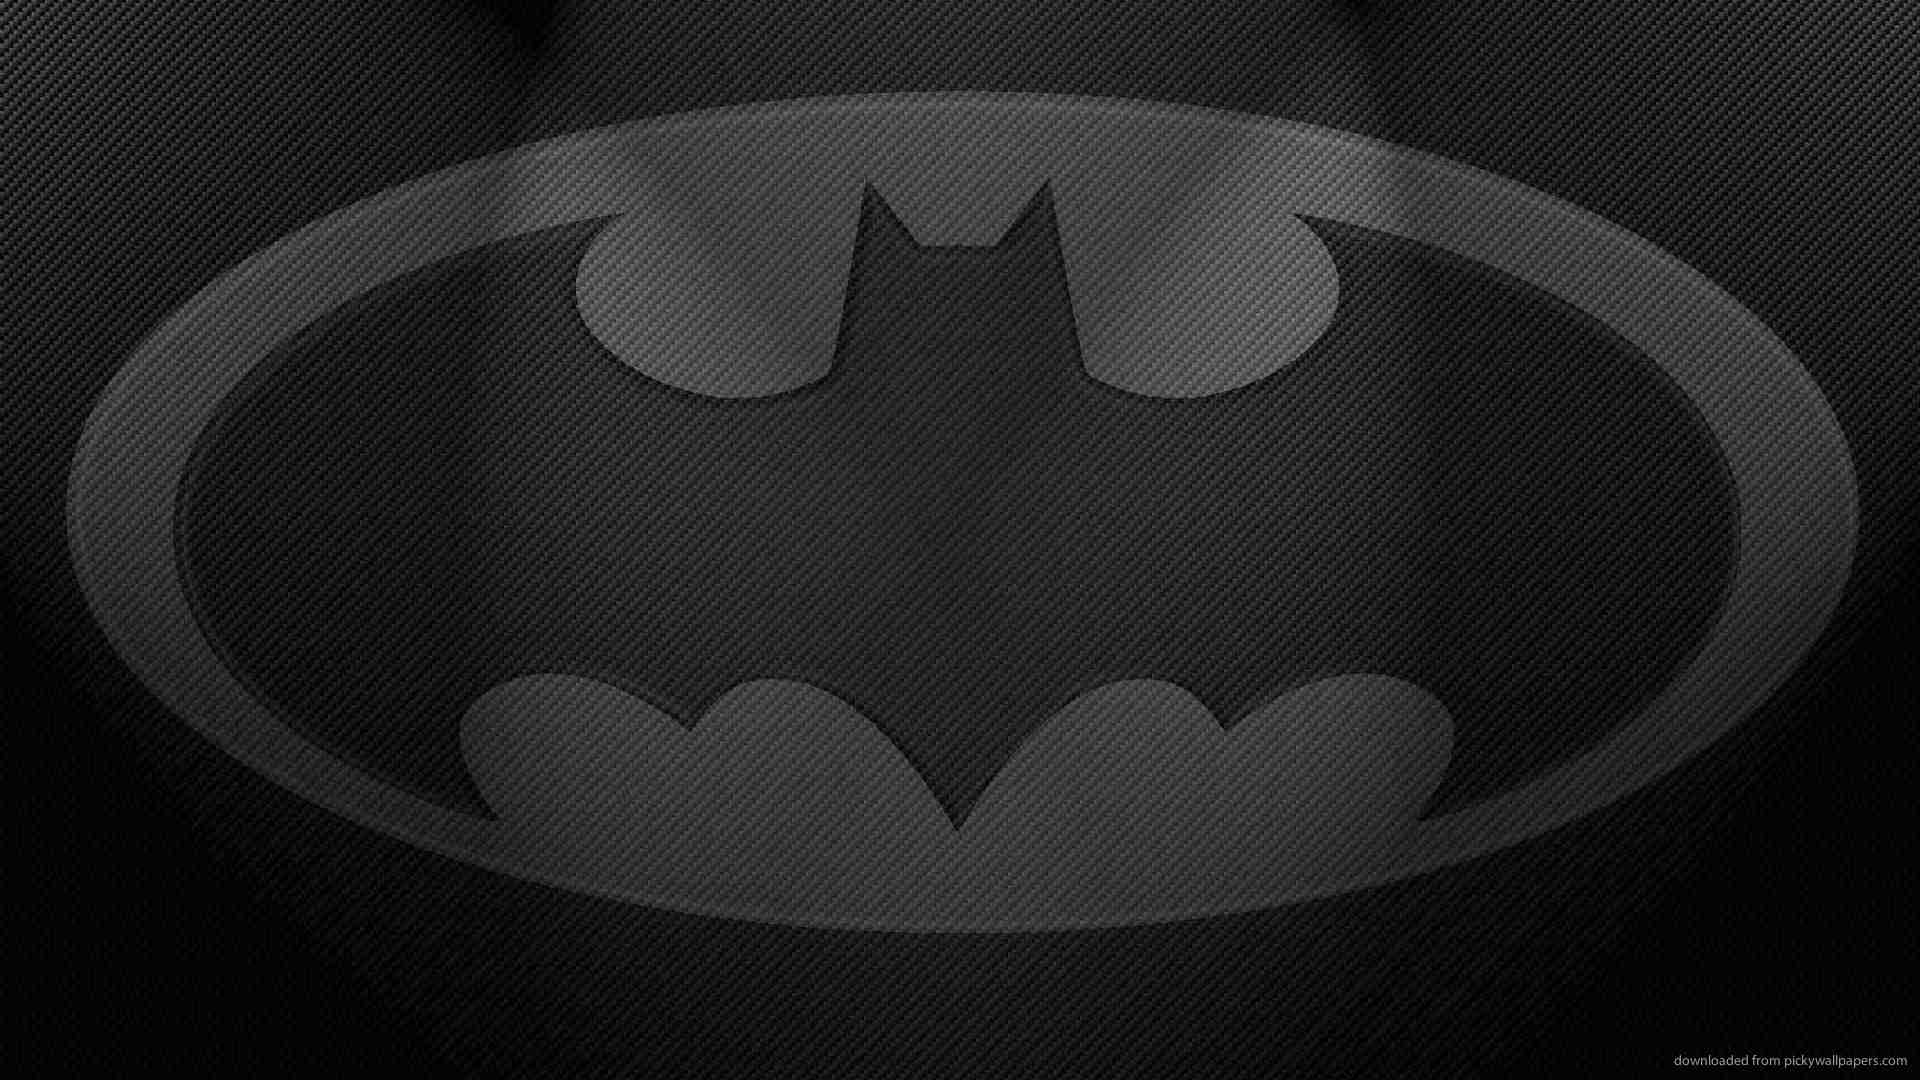 Batman logo wallpaper movies tvshows   986115 1920x1080